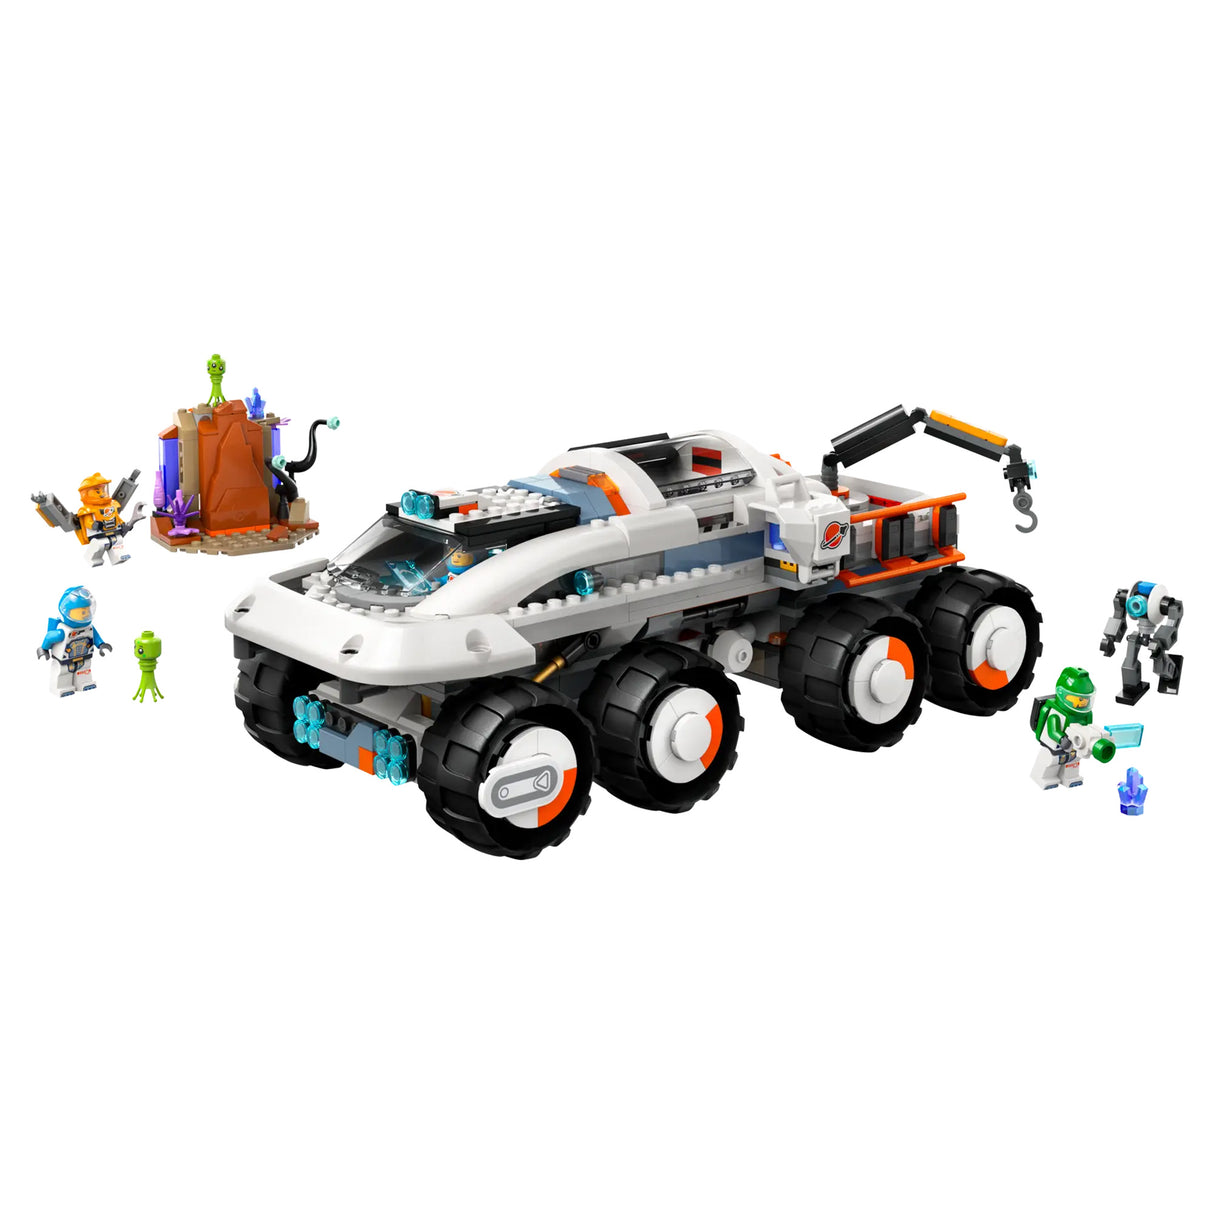 LEGO City Command Rover and Crane Loader 60432, (758-pieces)